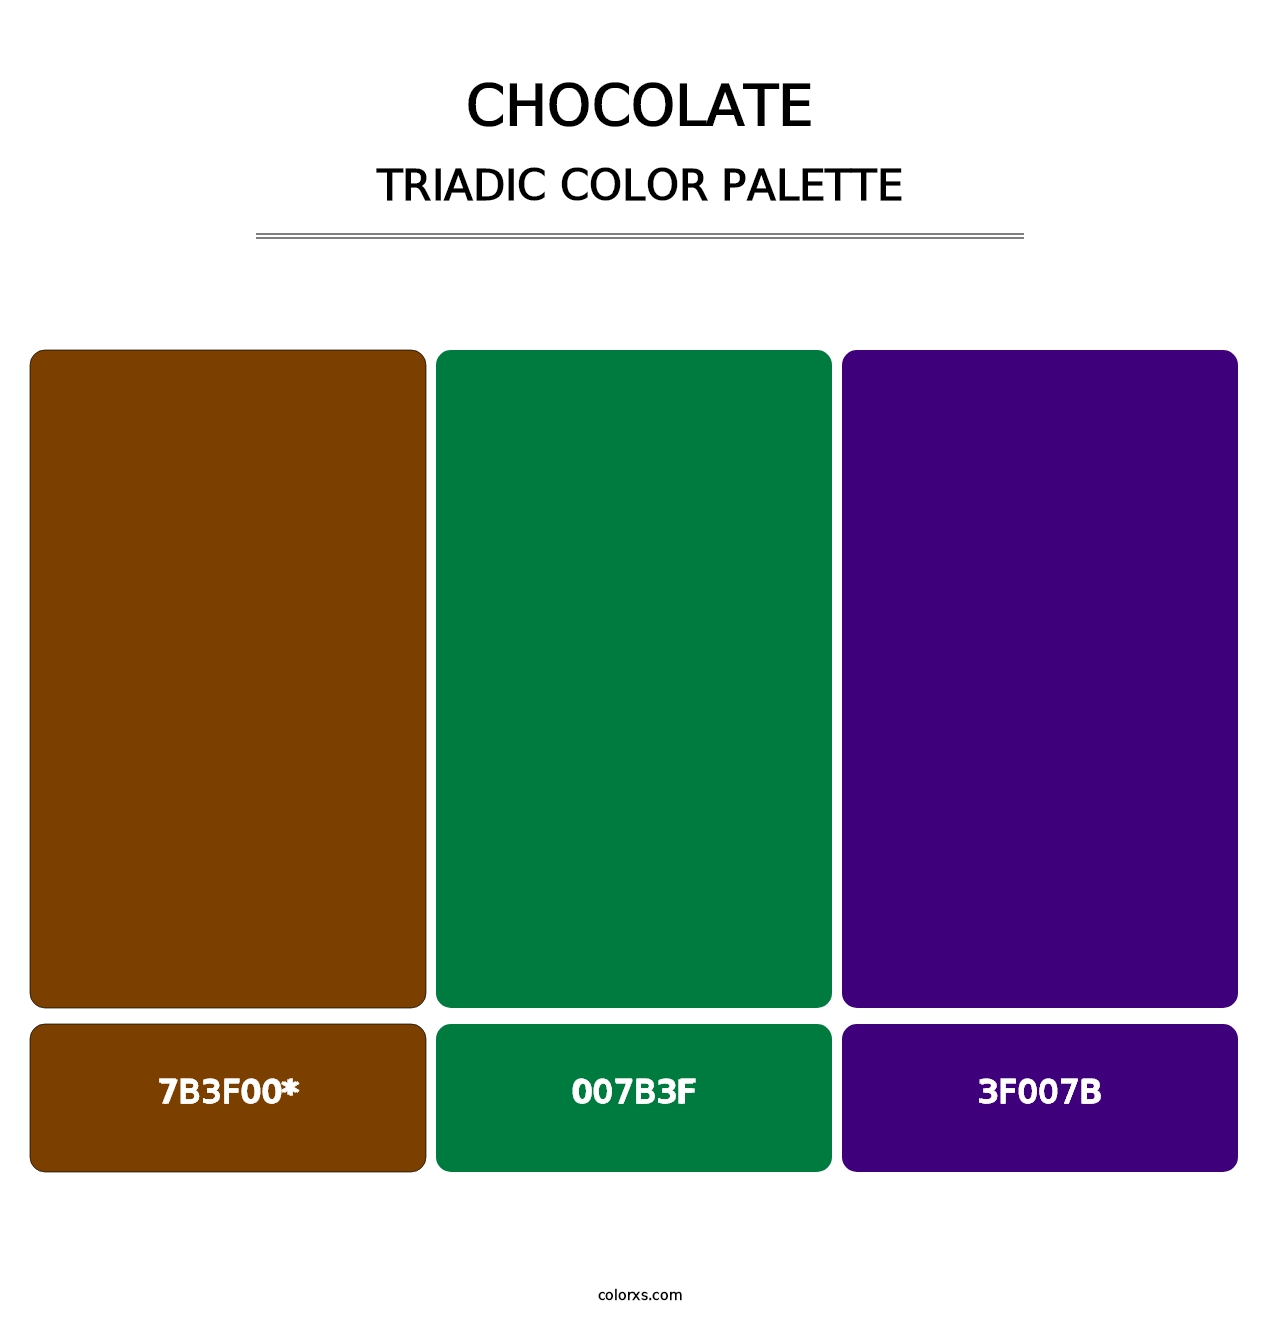 Chocolate - Triadic Color Palette